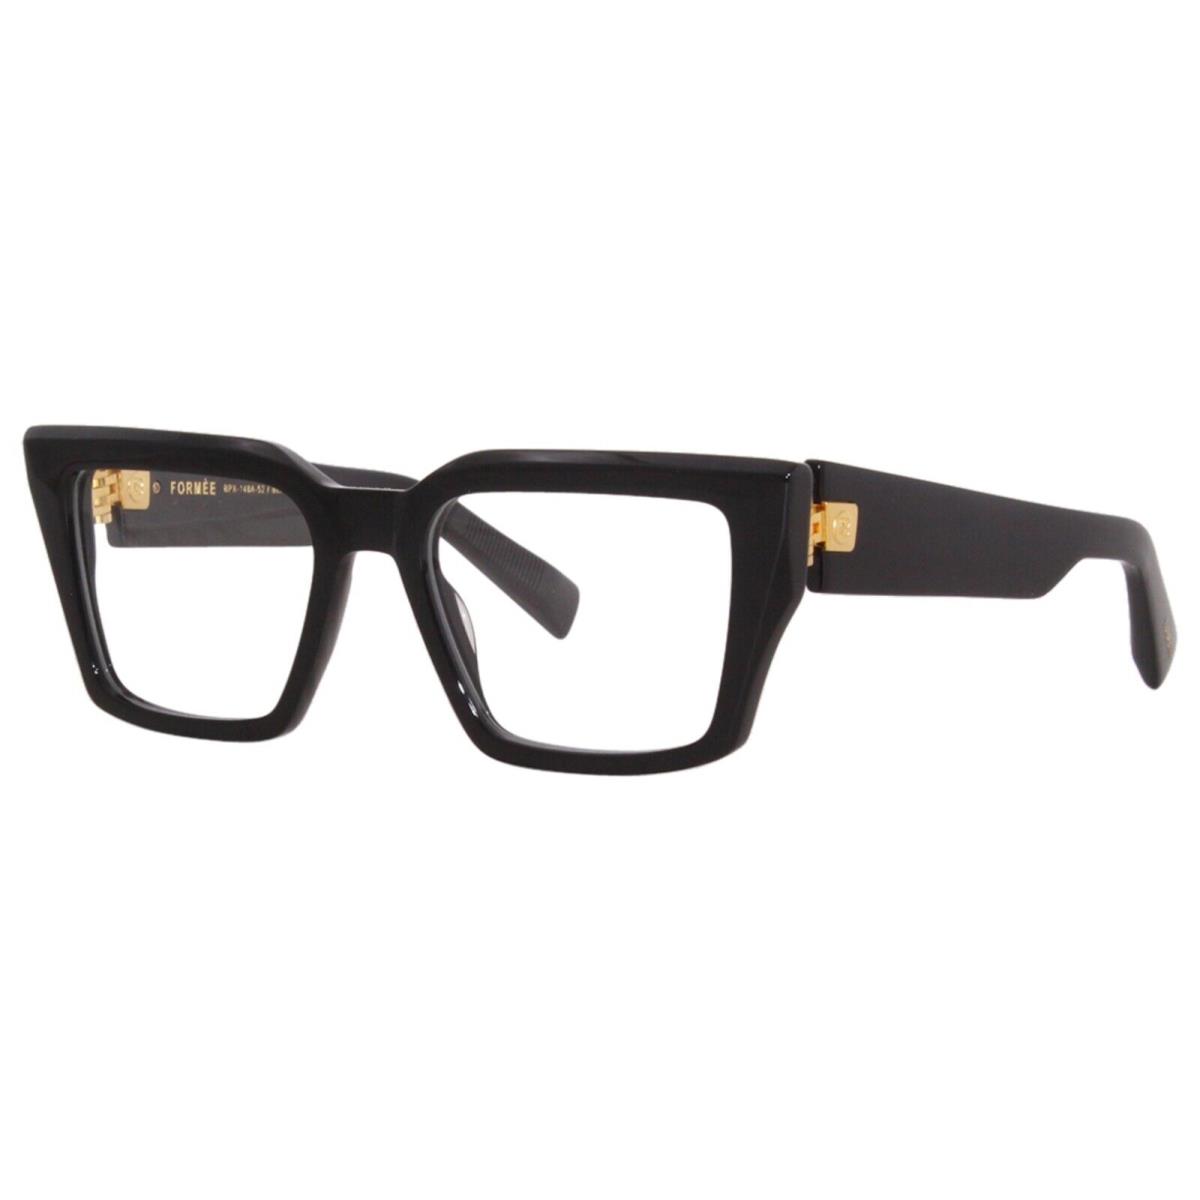 Balmain Eyeglasses Formee Black Gold Full Rim Frames 52MM Rx-able